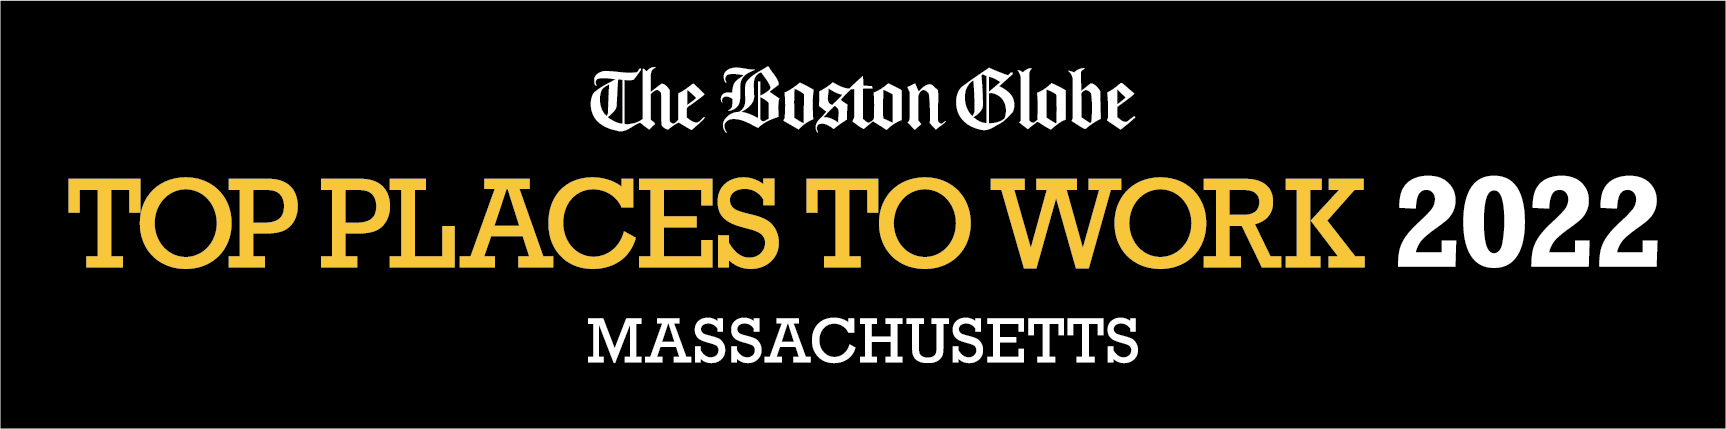 The boston Globe: Top Places to Work 2022 Massachusetts